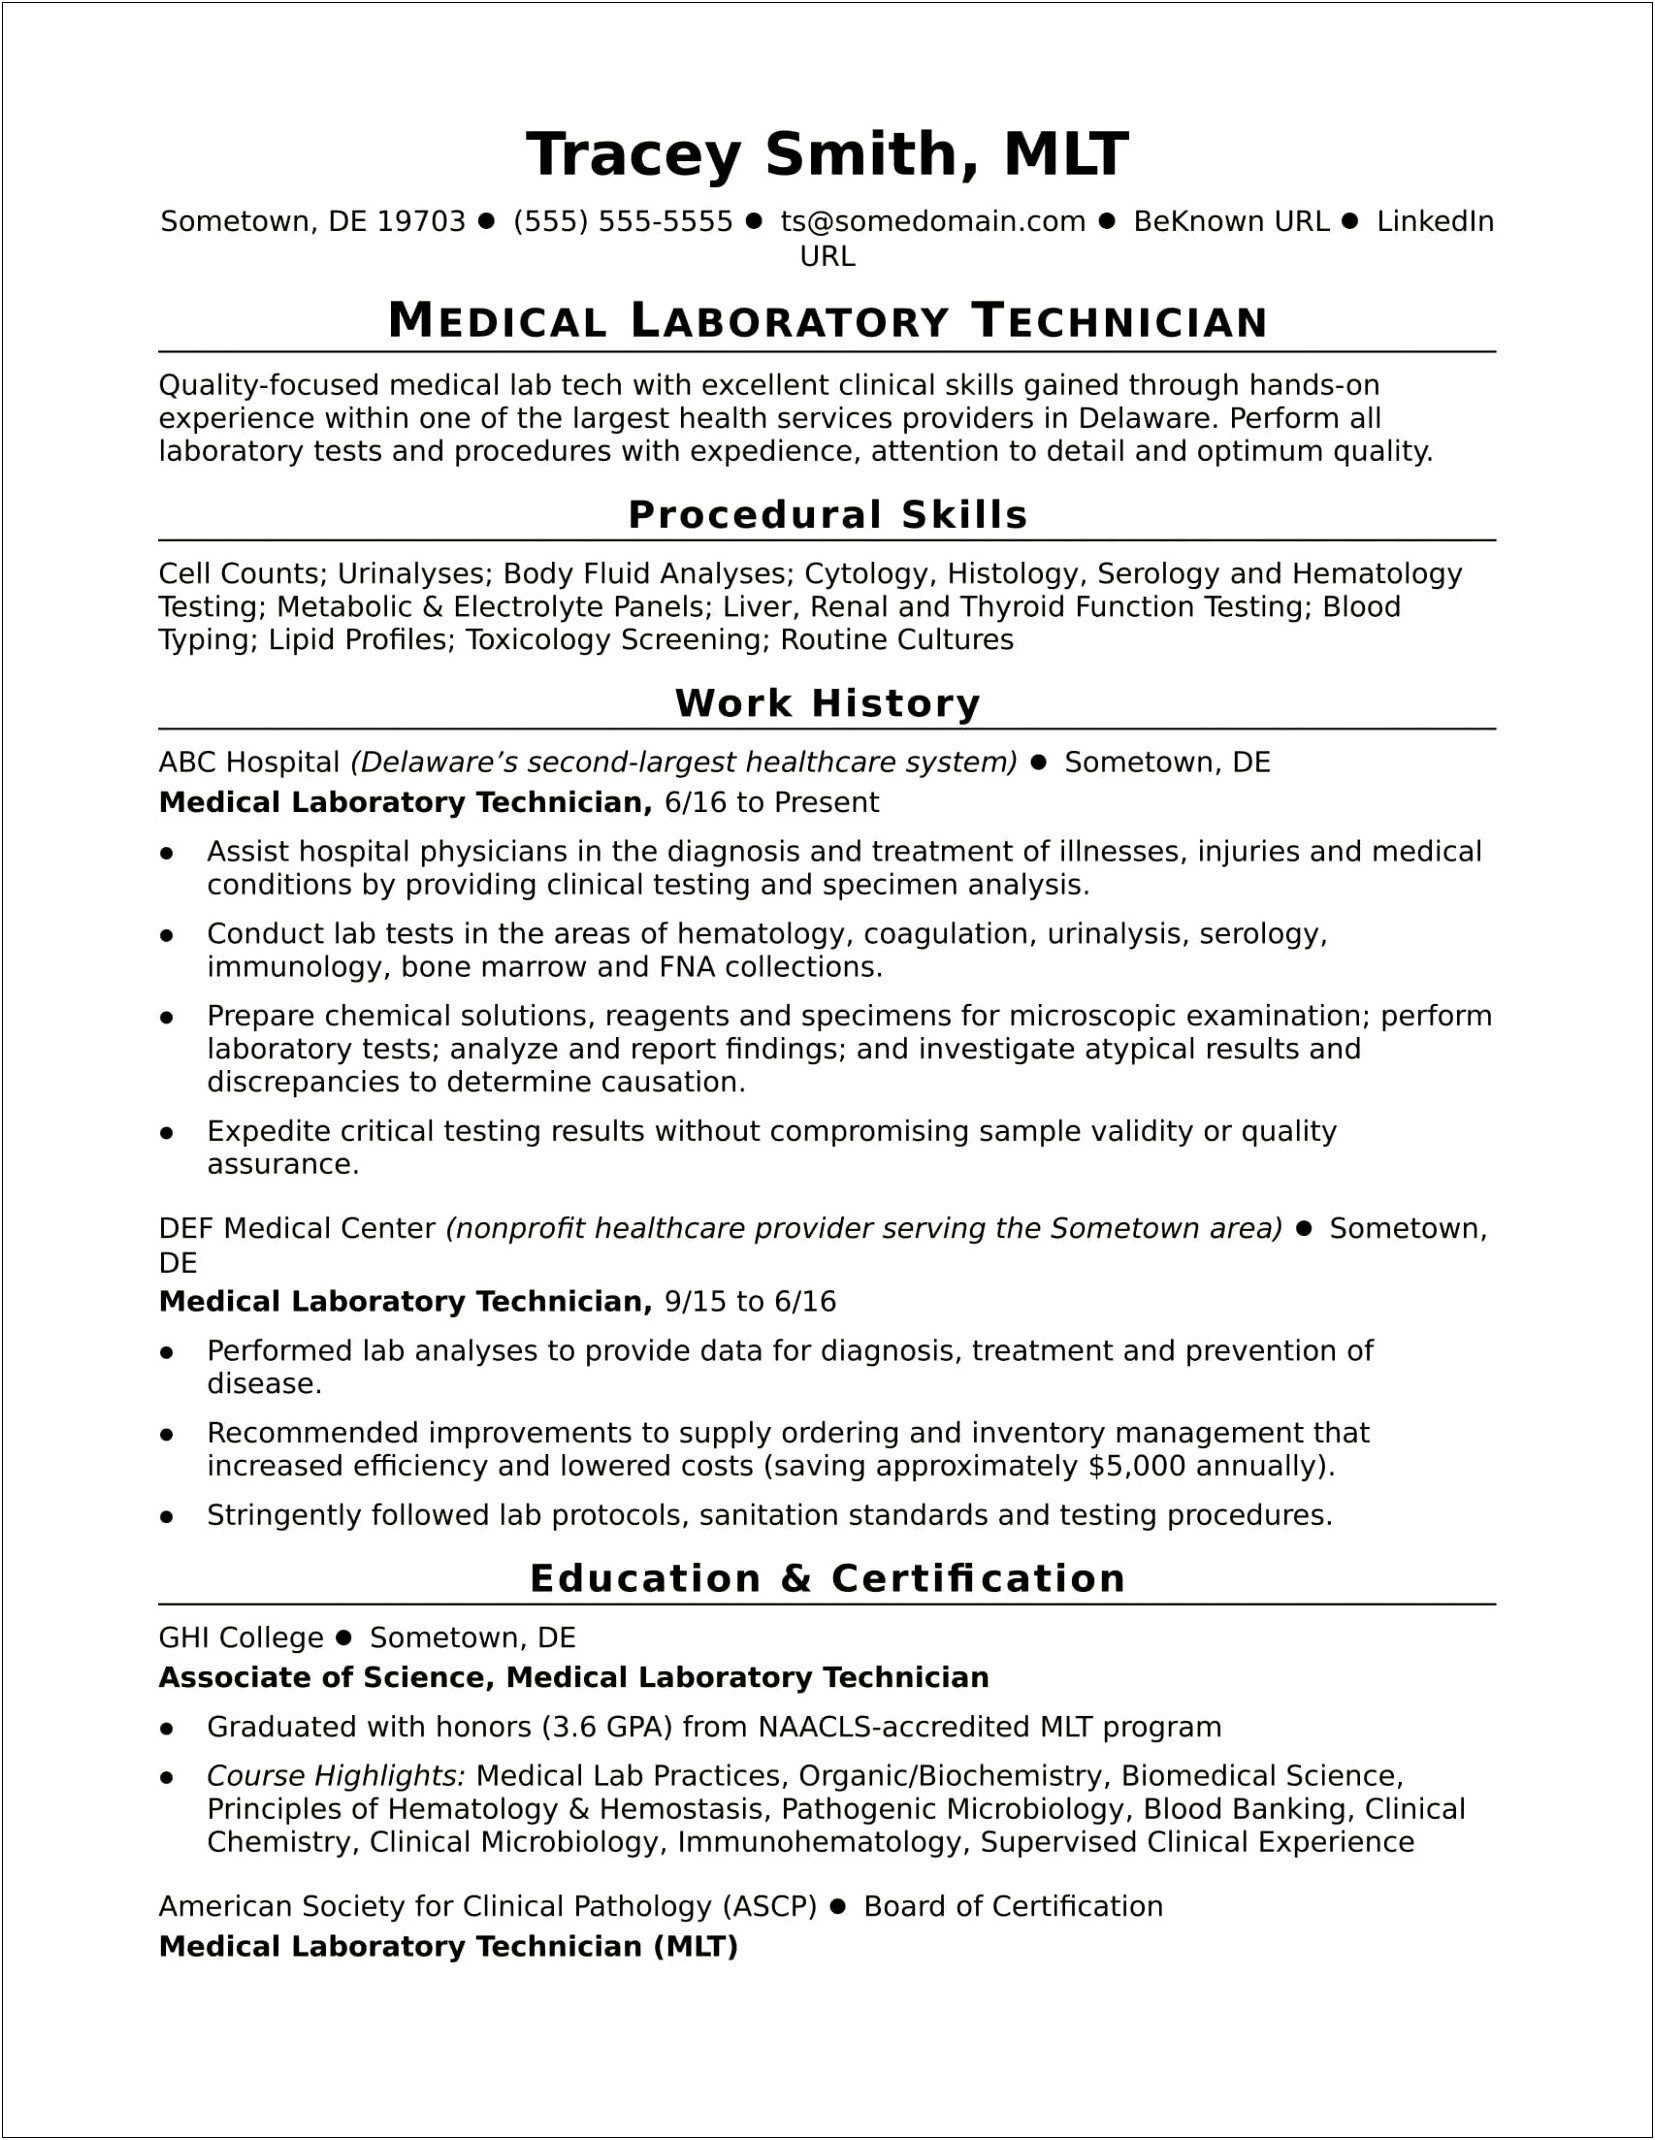 Medical Laboratory Technologist Job Resume